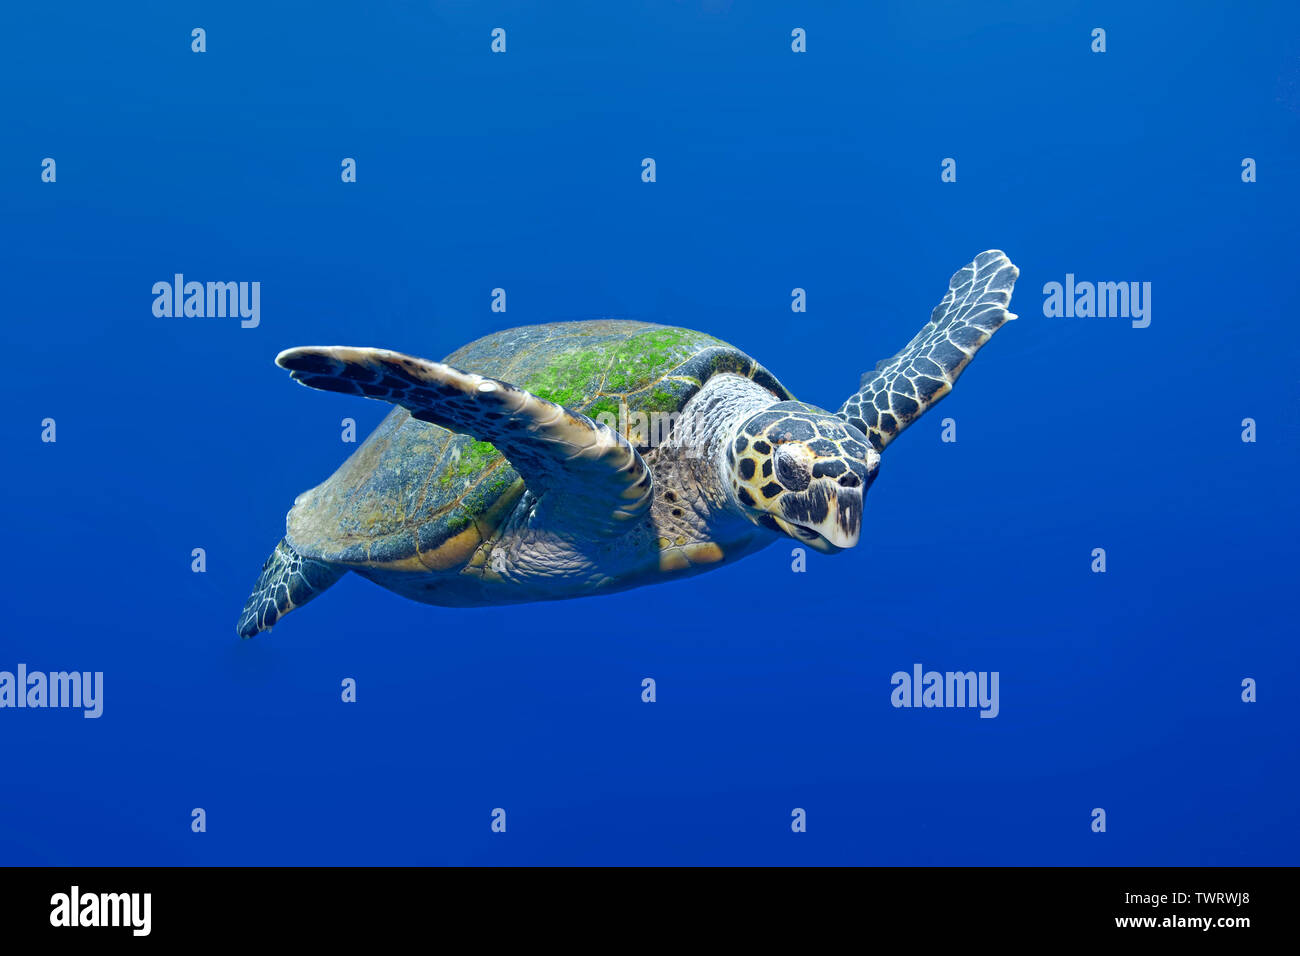 Hawksbill turtle (Eretmochelys imbricata) swimming in blue water, Marsa Alam, Egypt Stock Photo